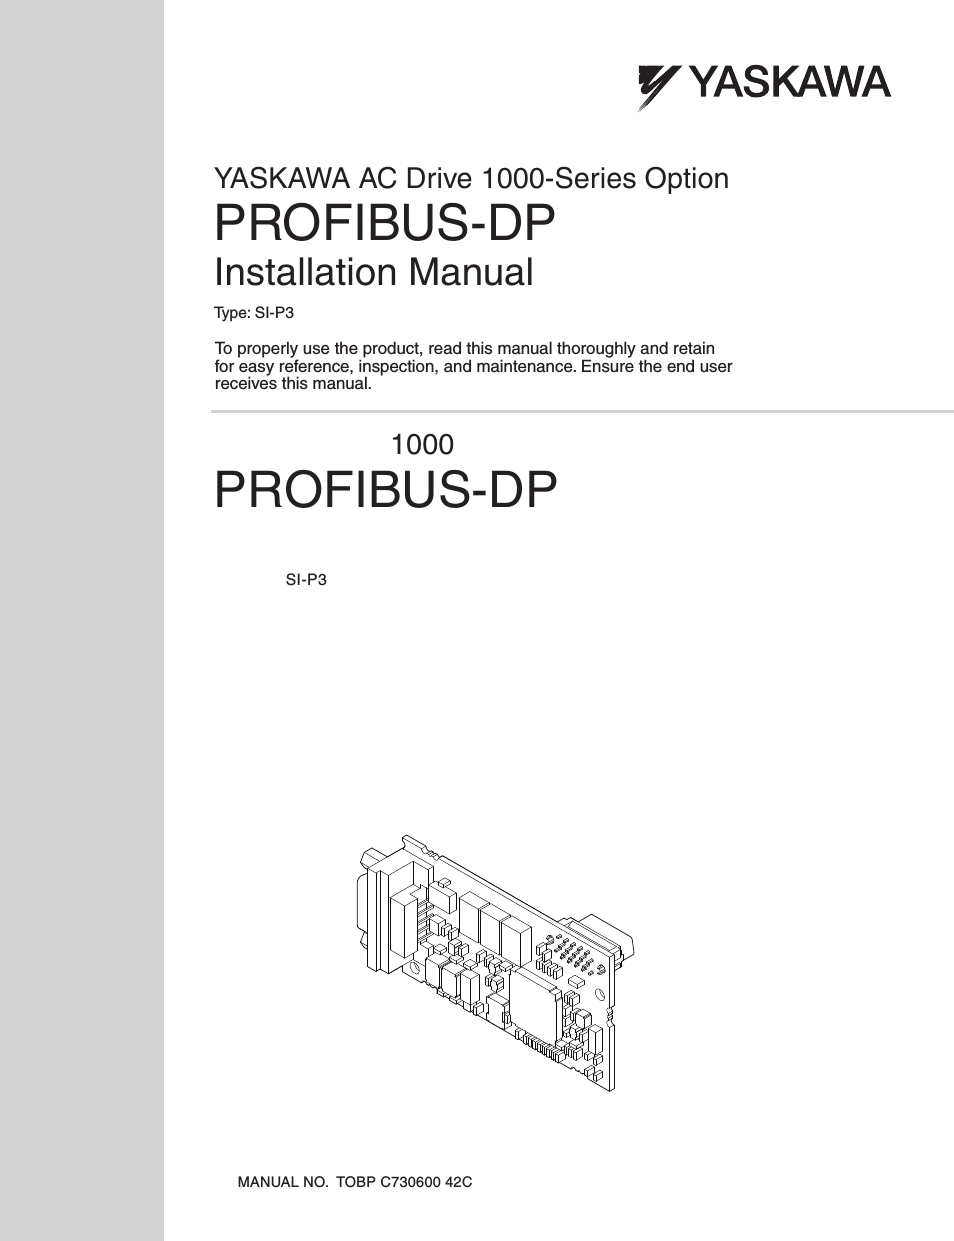 1000 Series Drive Option - Profibus-DP Installation